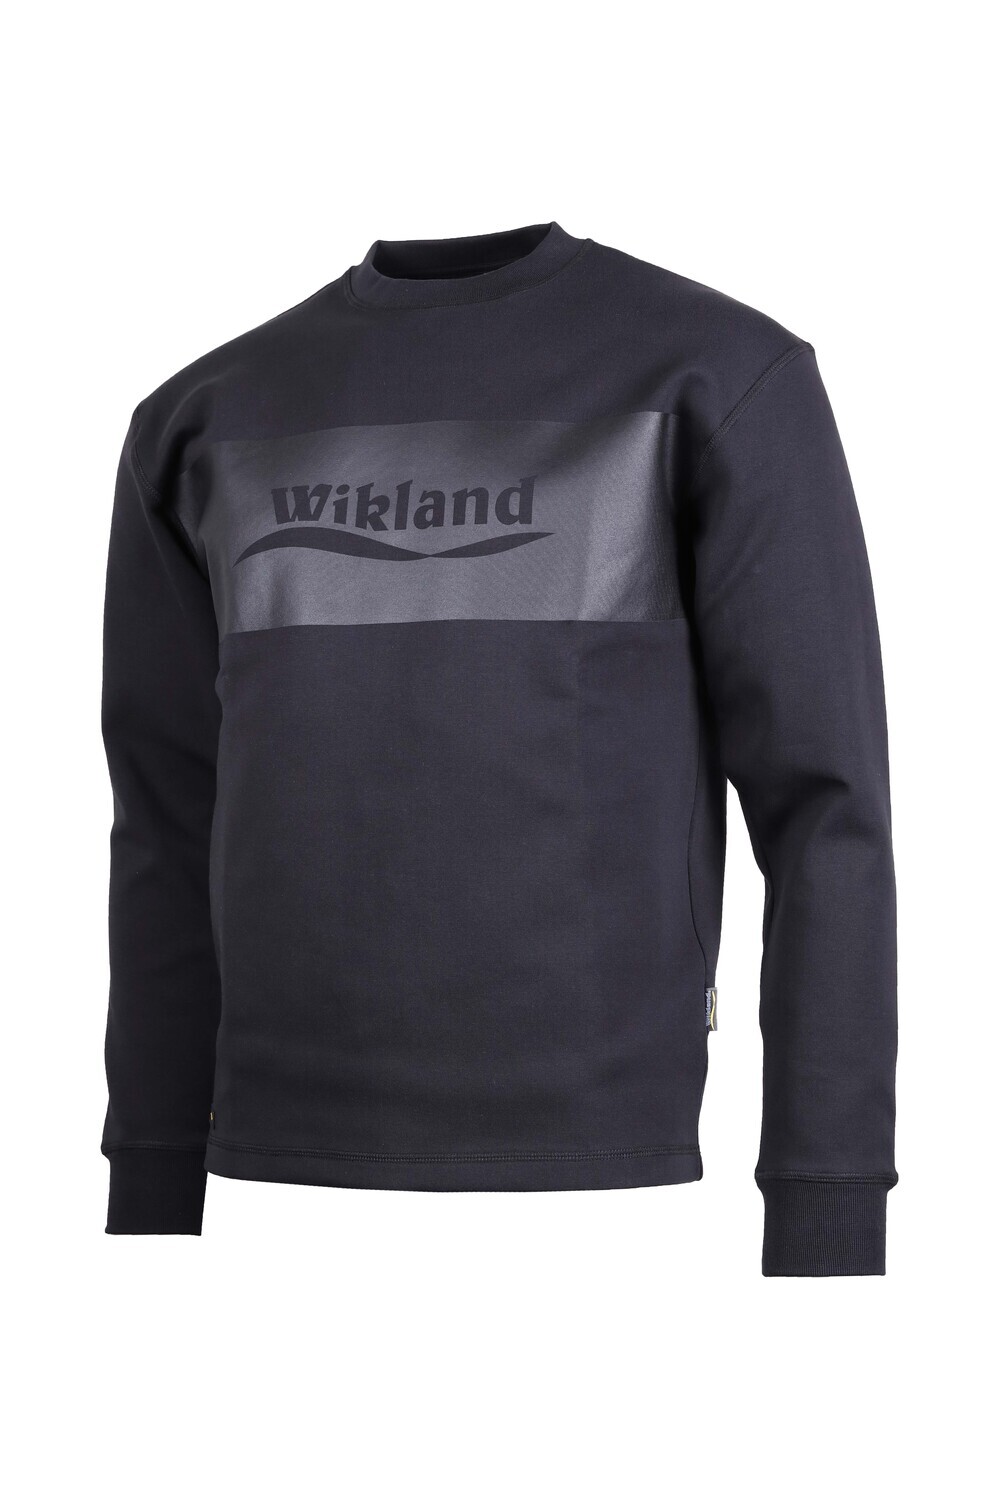 WIKLAND Sweatshirt mit Wikland Logo